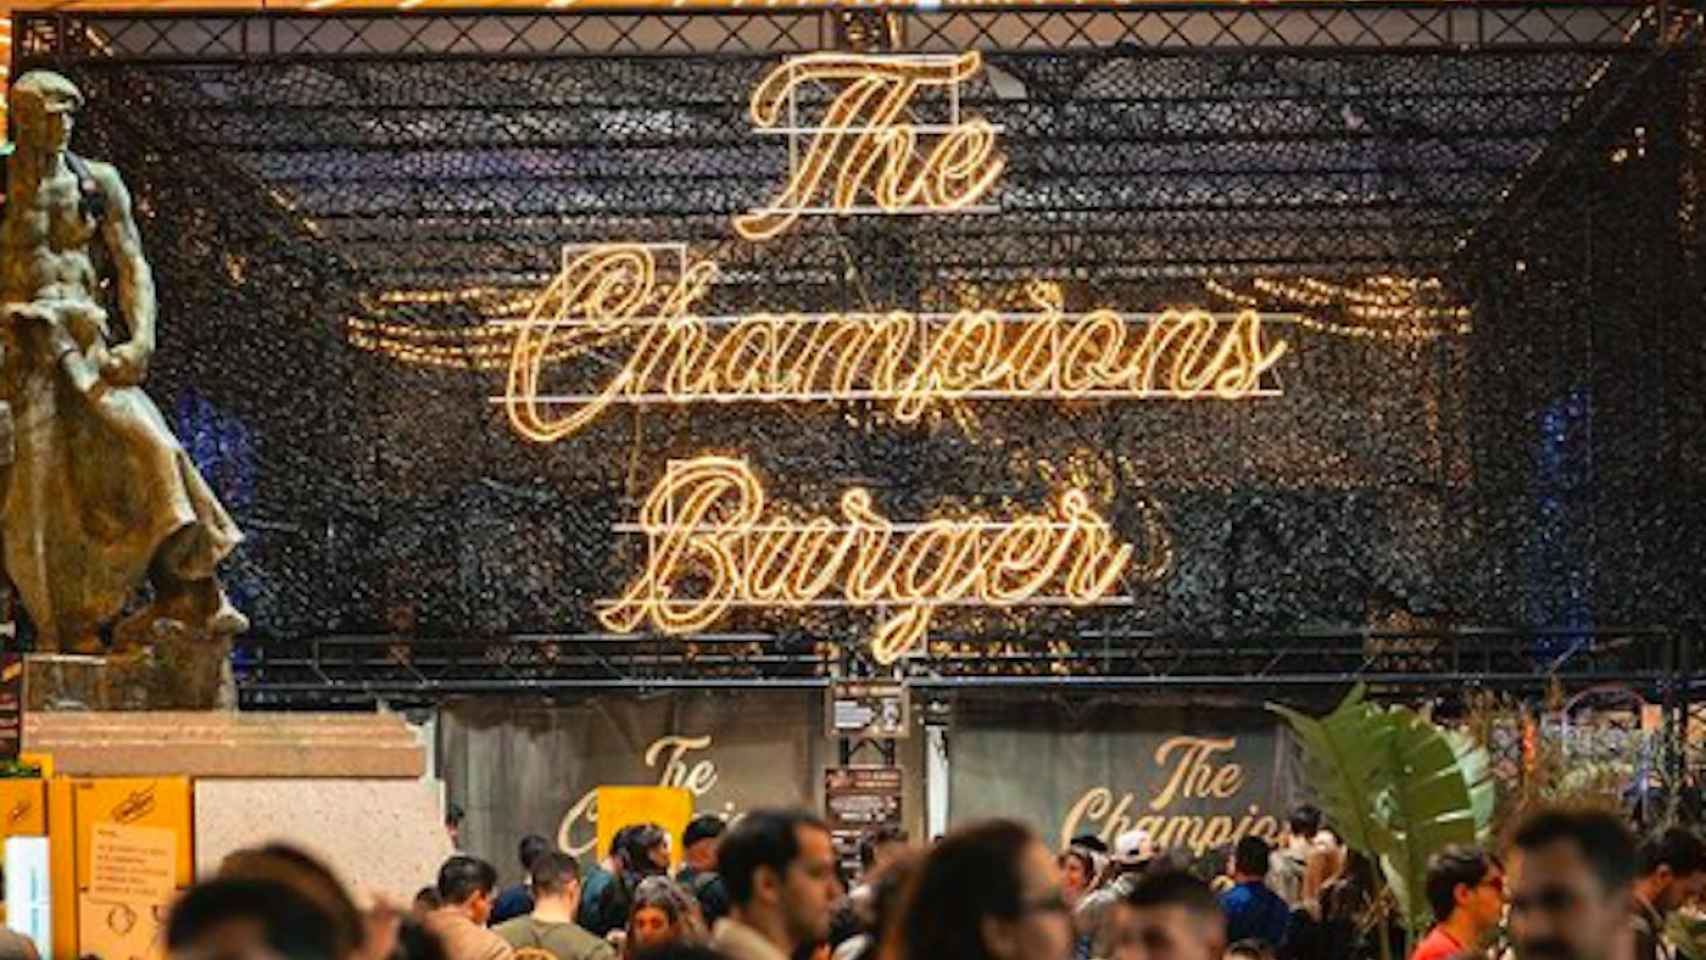 El campeonato The Champions Burguer